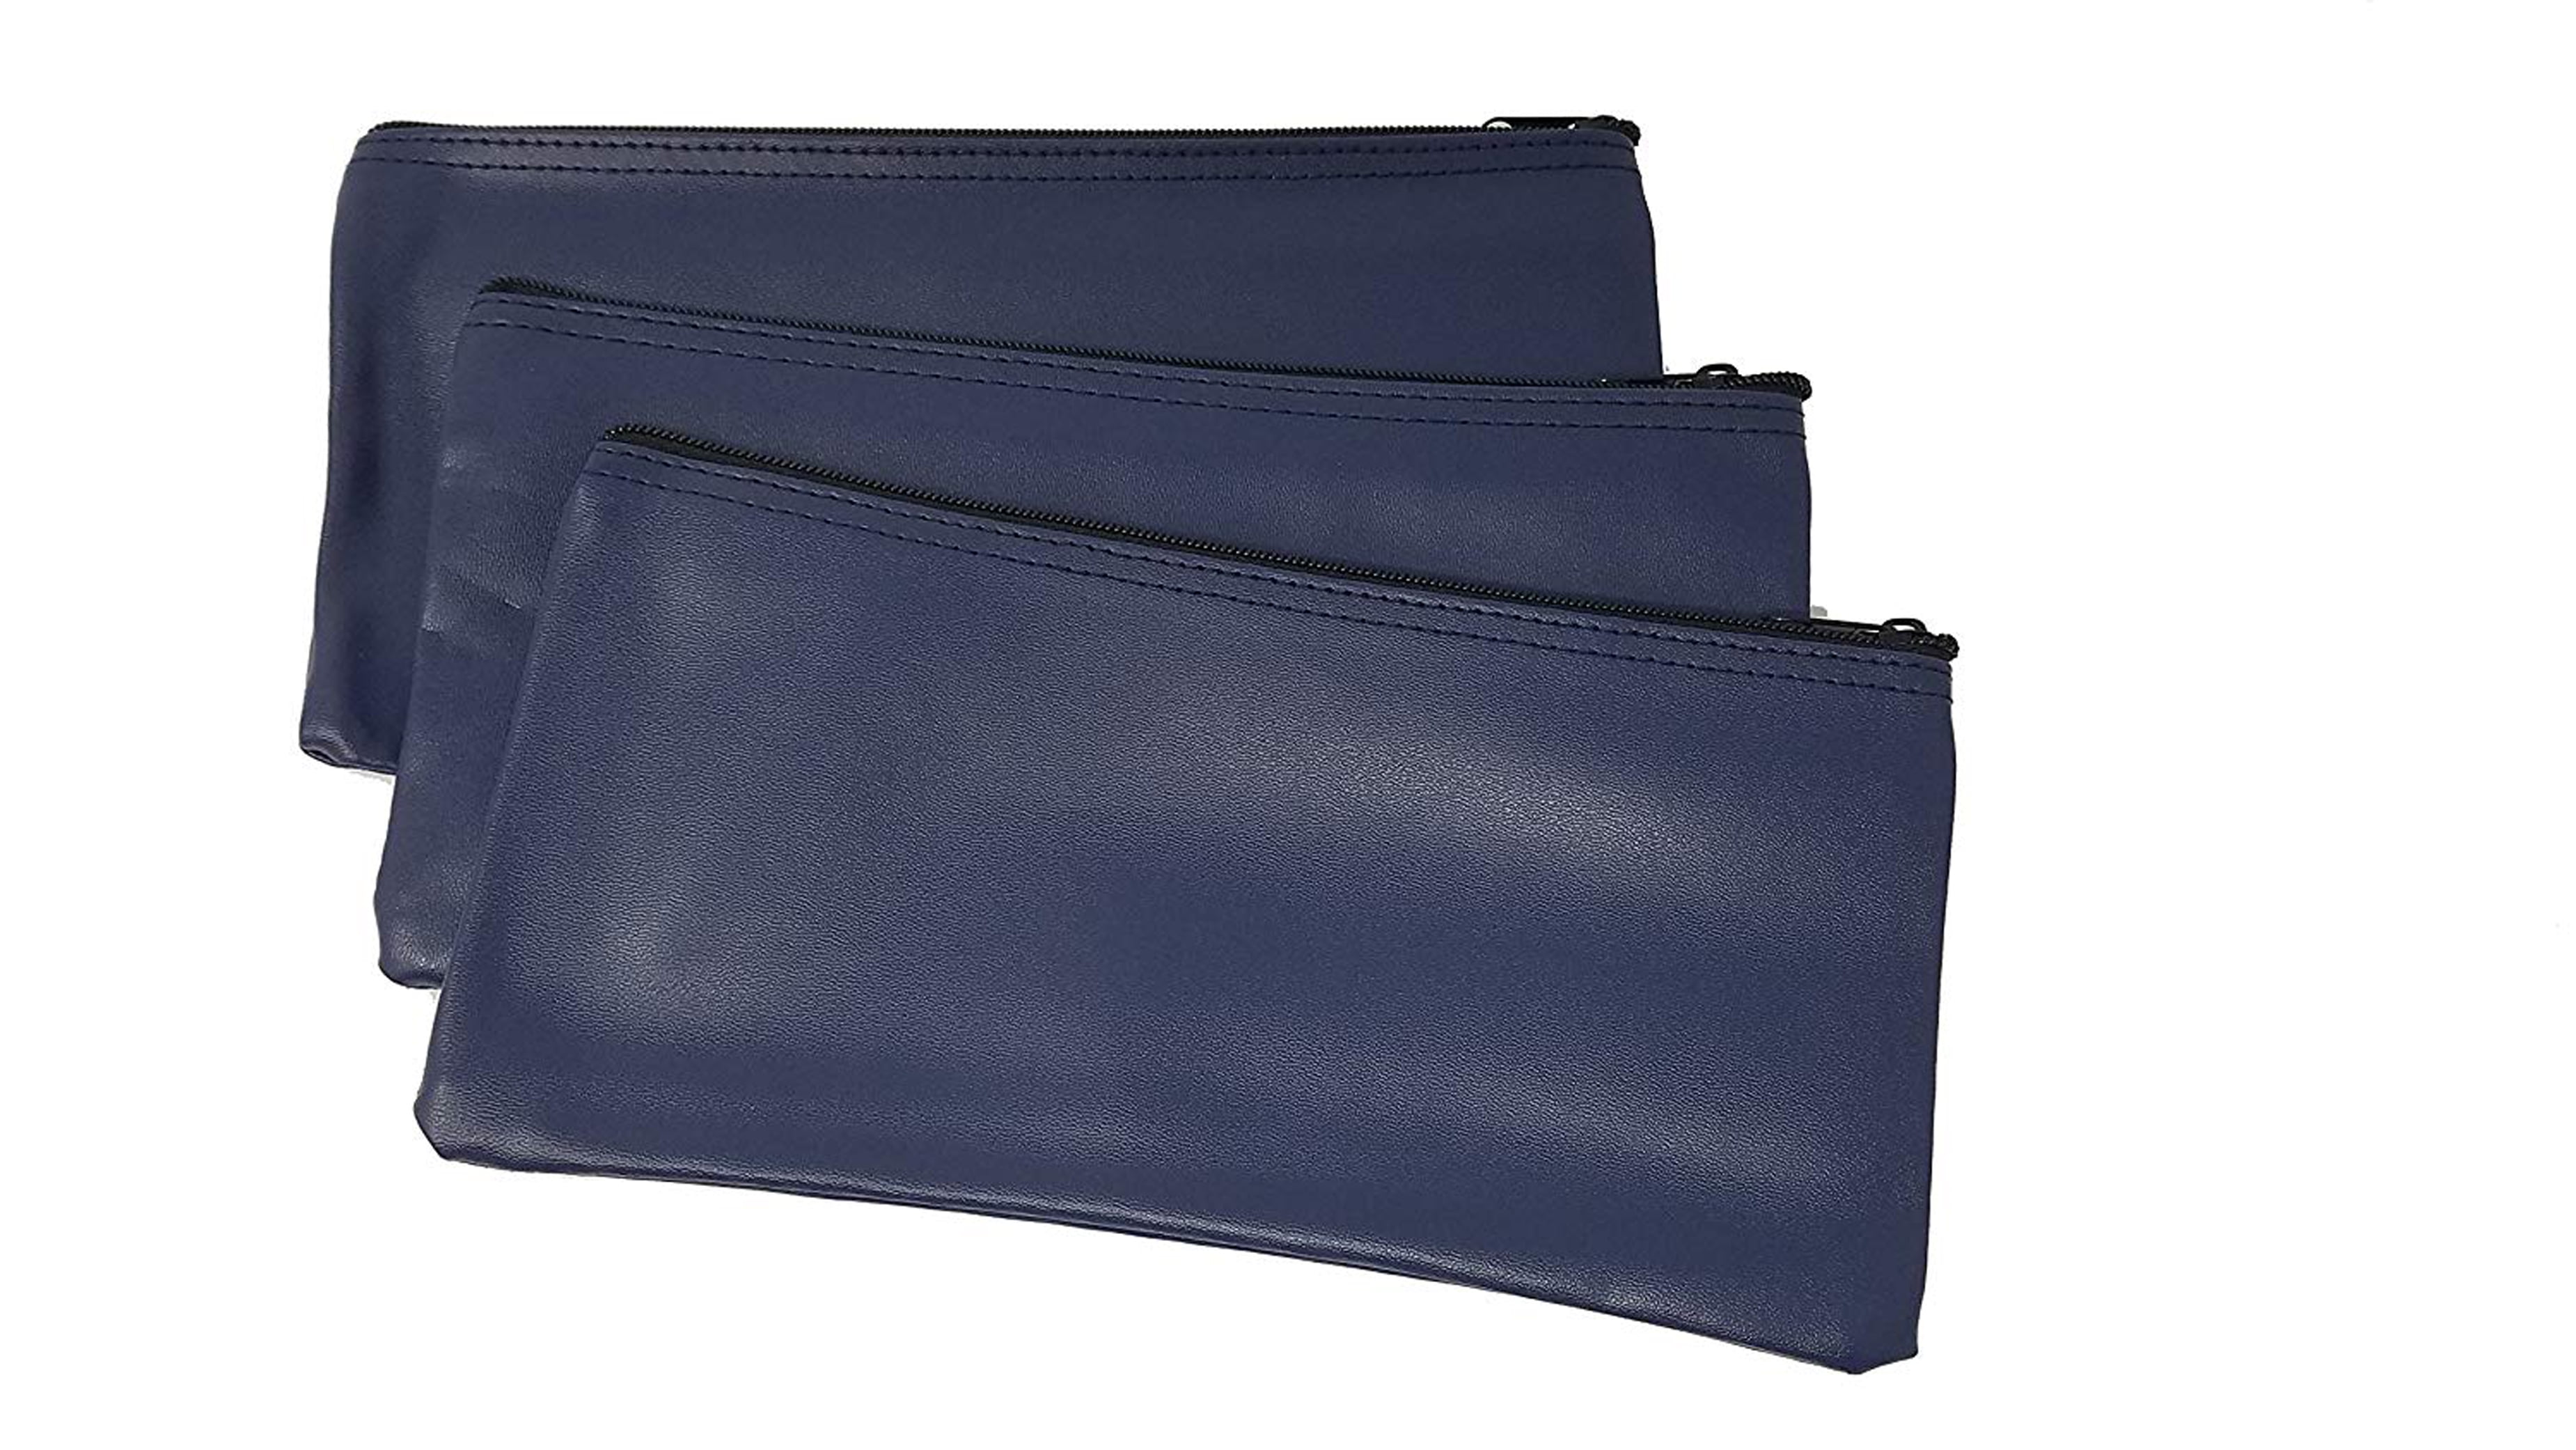 Coin Bag Cash Bag Clear 10 Bags 5.5 x 10.5 Company Security Bank Deposit/Utility Zipper Bag